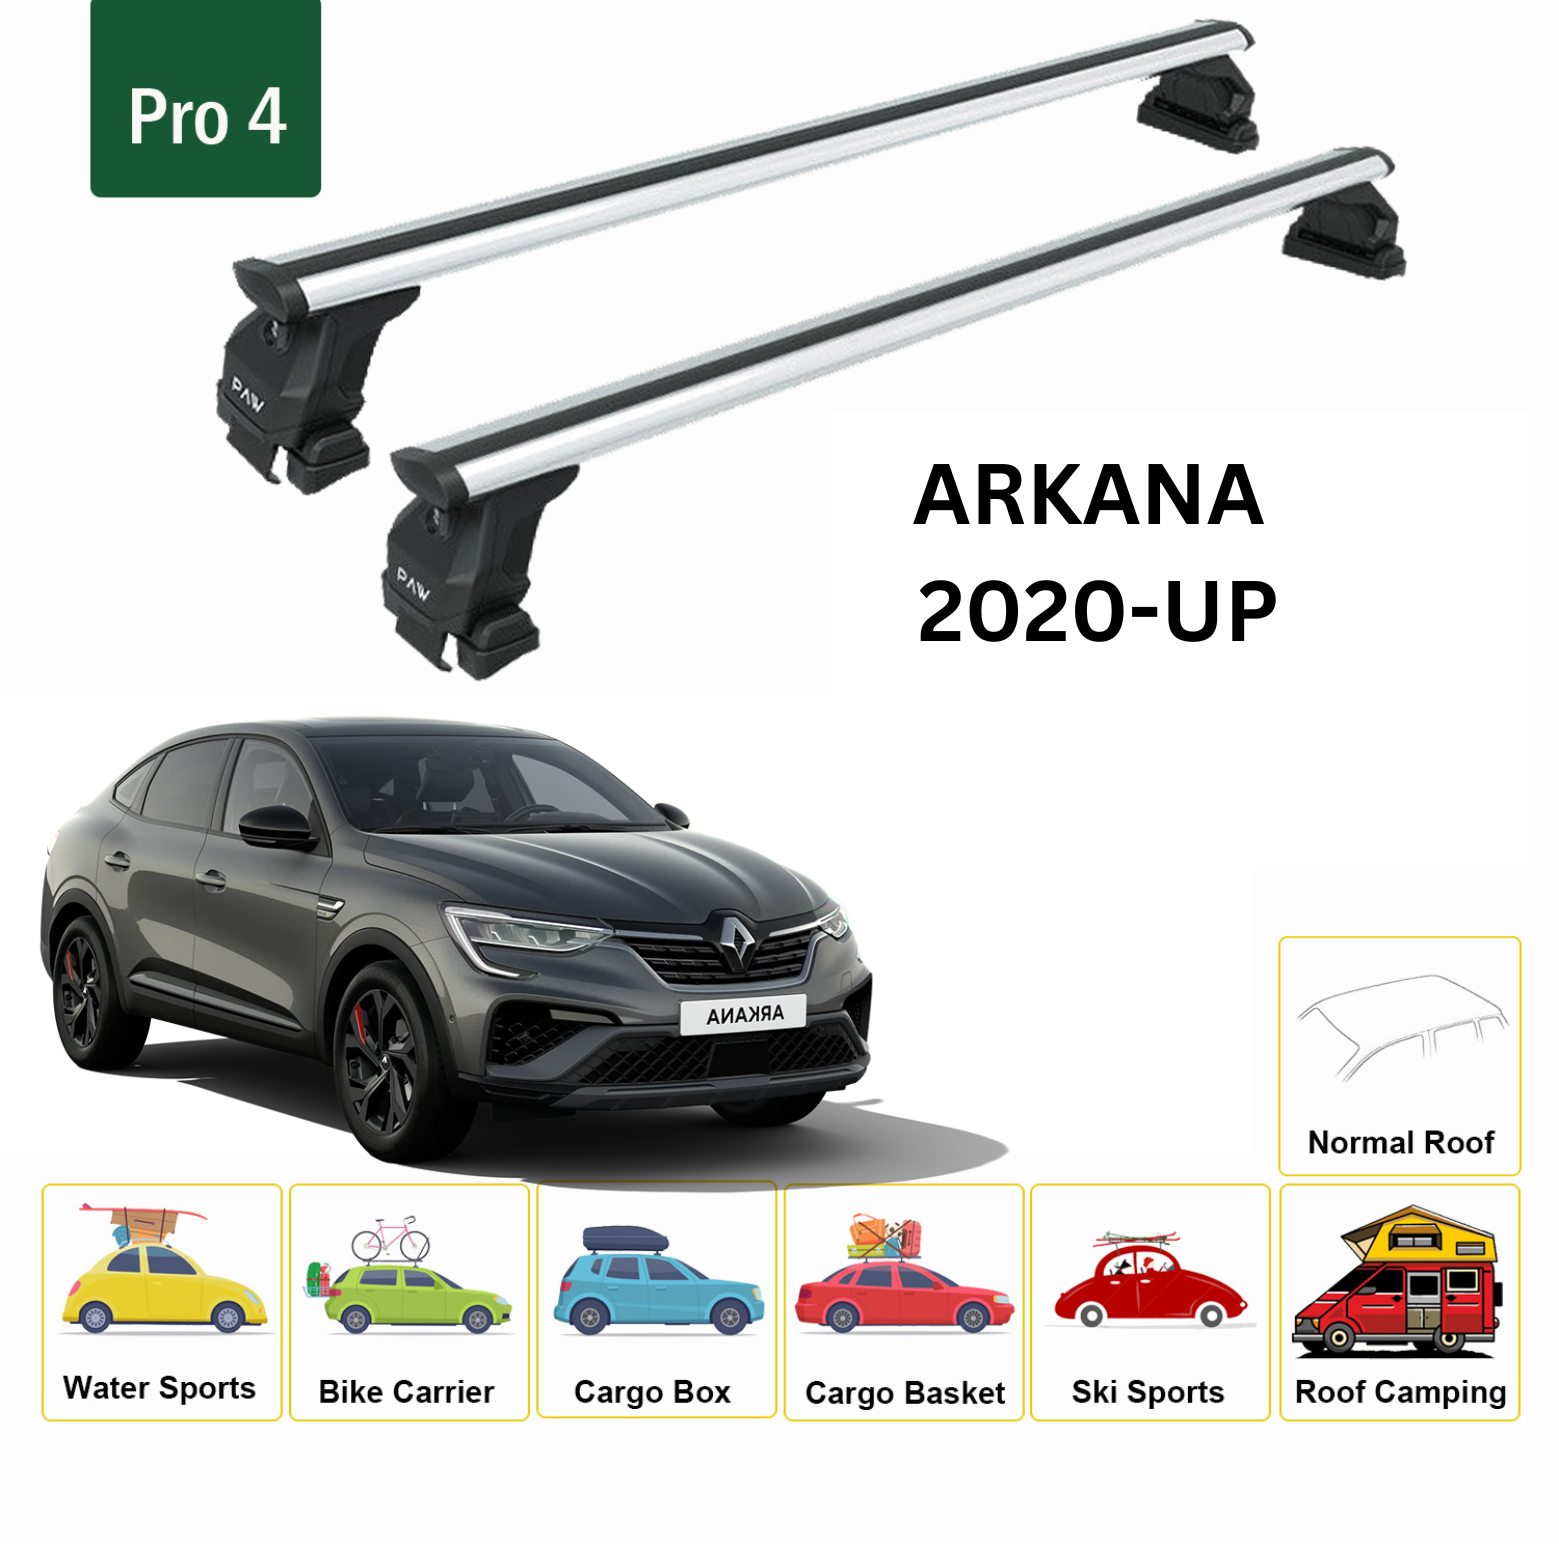 For Renault Arkana 2020-Up Roof Rack System, Aluminium Cross Bar, Metal Bracket, Normal Roof, Silver